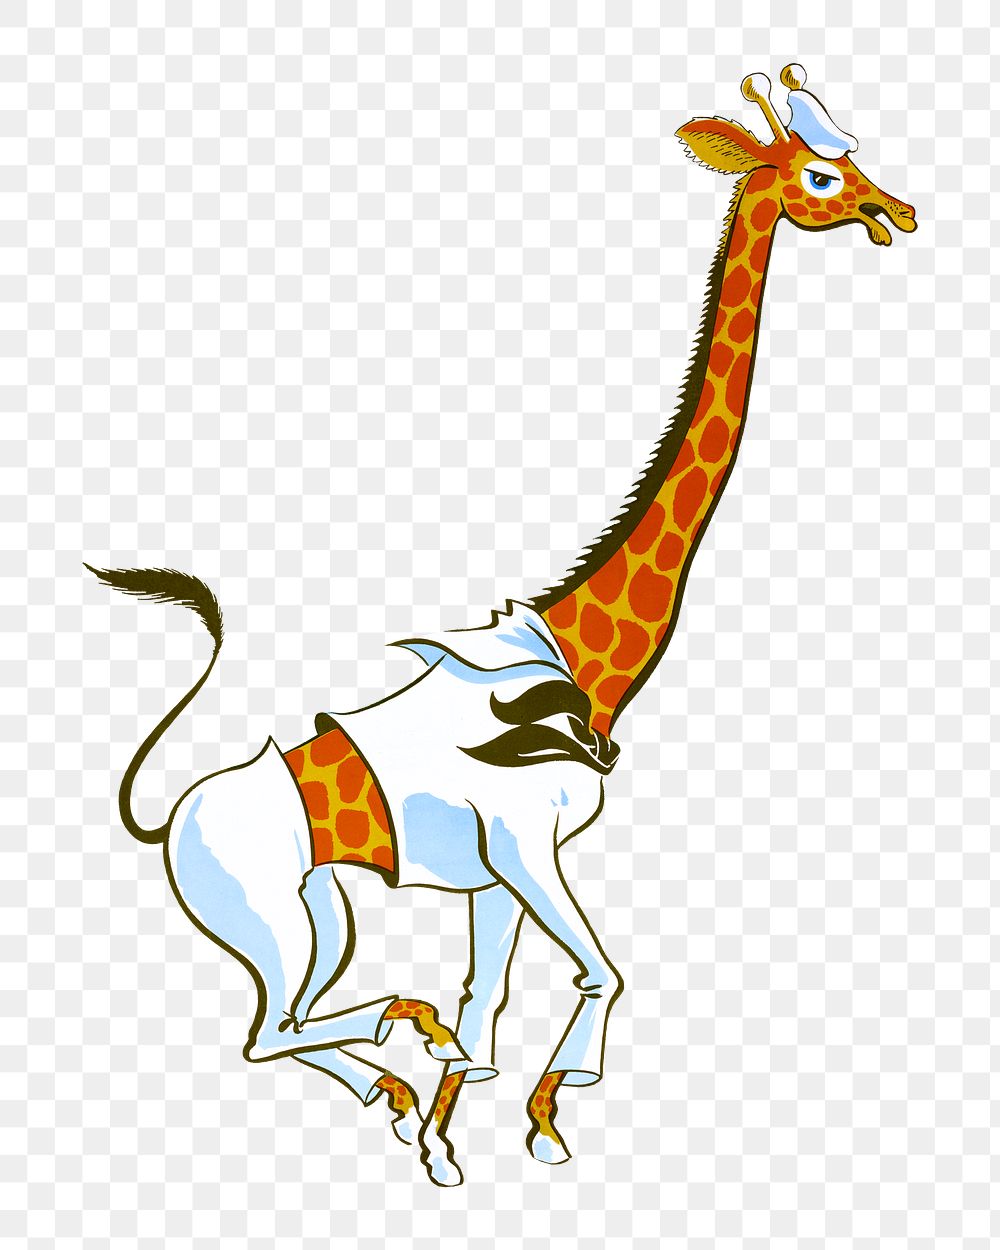 Giraffe in navy uniform cartoon illustration, transparent background.  Remixed by rawpixel.